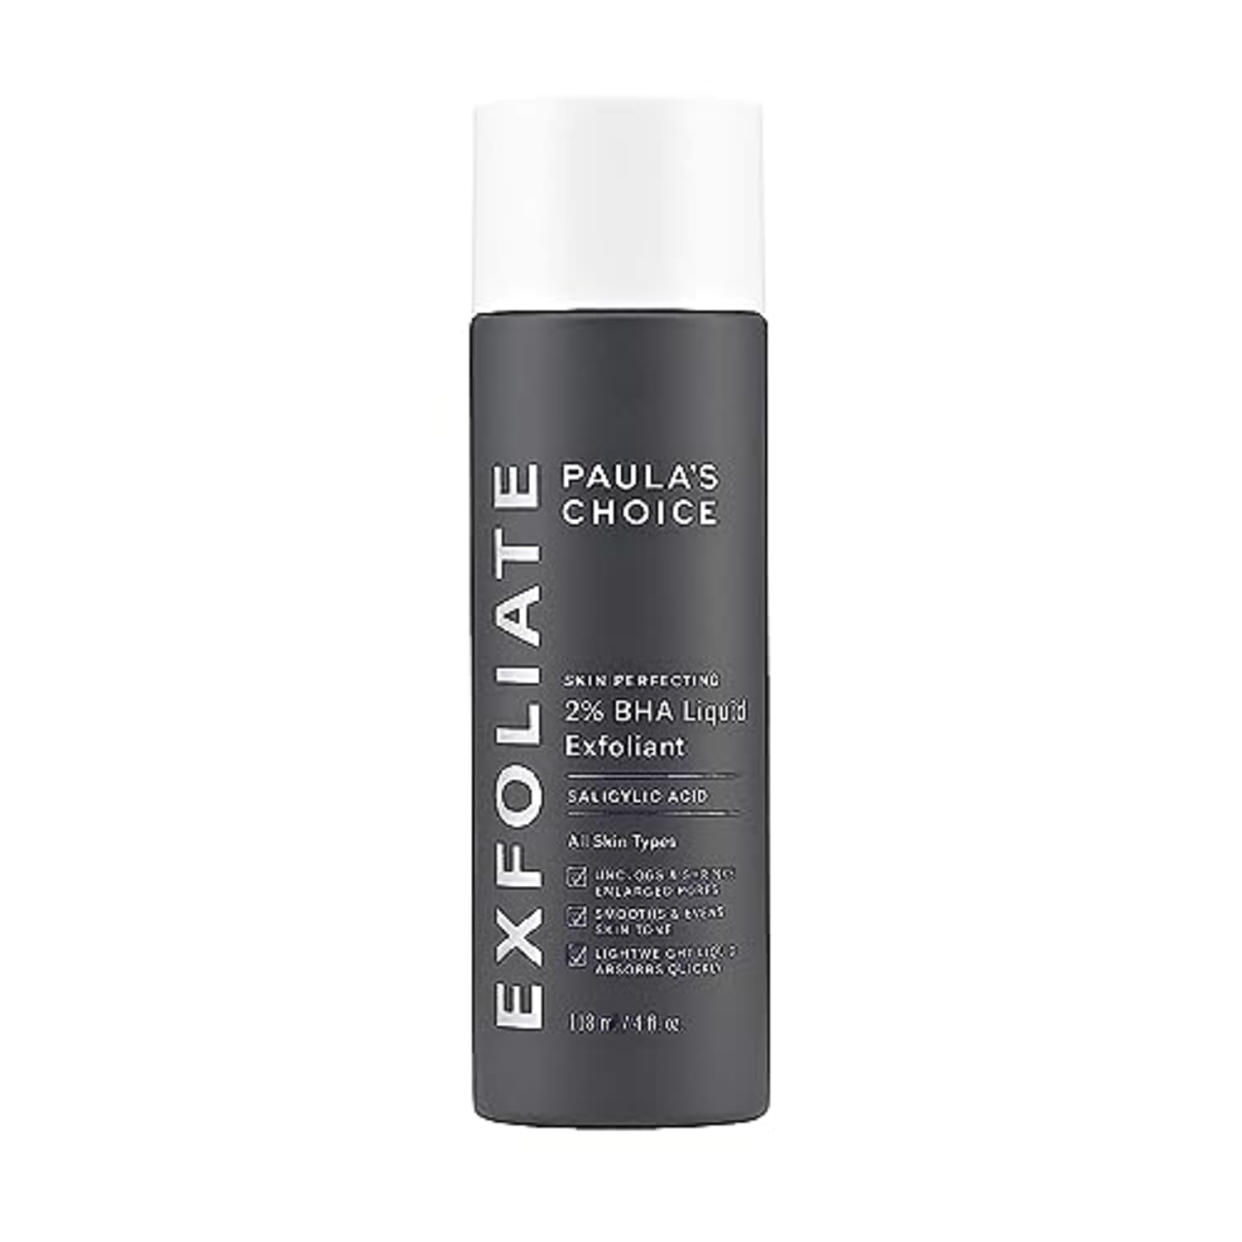 Paulas Choice--SKIN PERFECTING 2% BHA Liquid Salicylic Acid Exfoliant--Facial Exfoliant for Blackheads, Enlarged Pores, Wrinkles & Fine Lines, 4 oz Bottle (AMAZON)